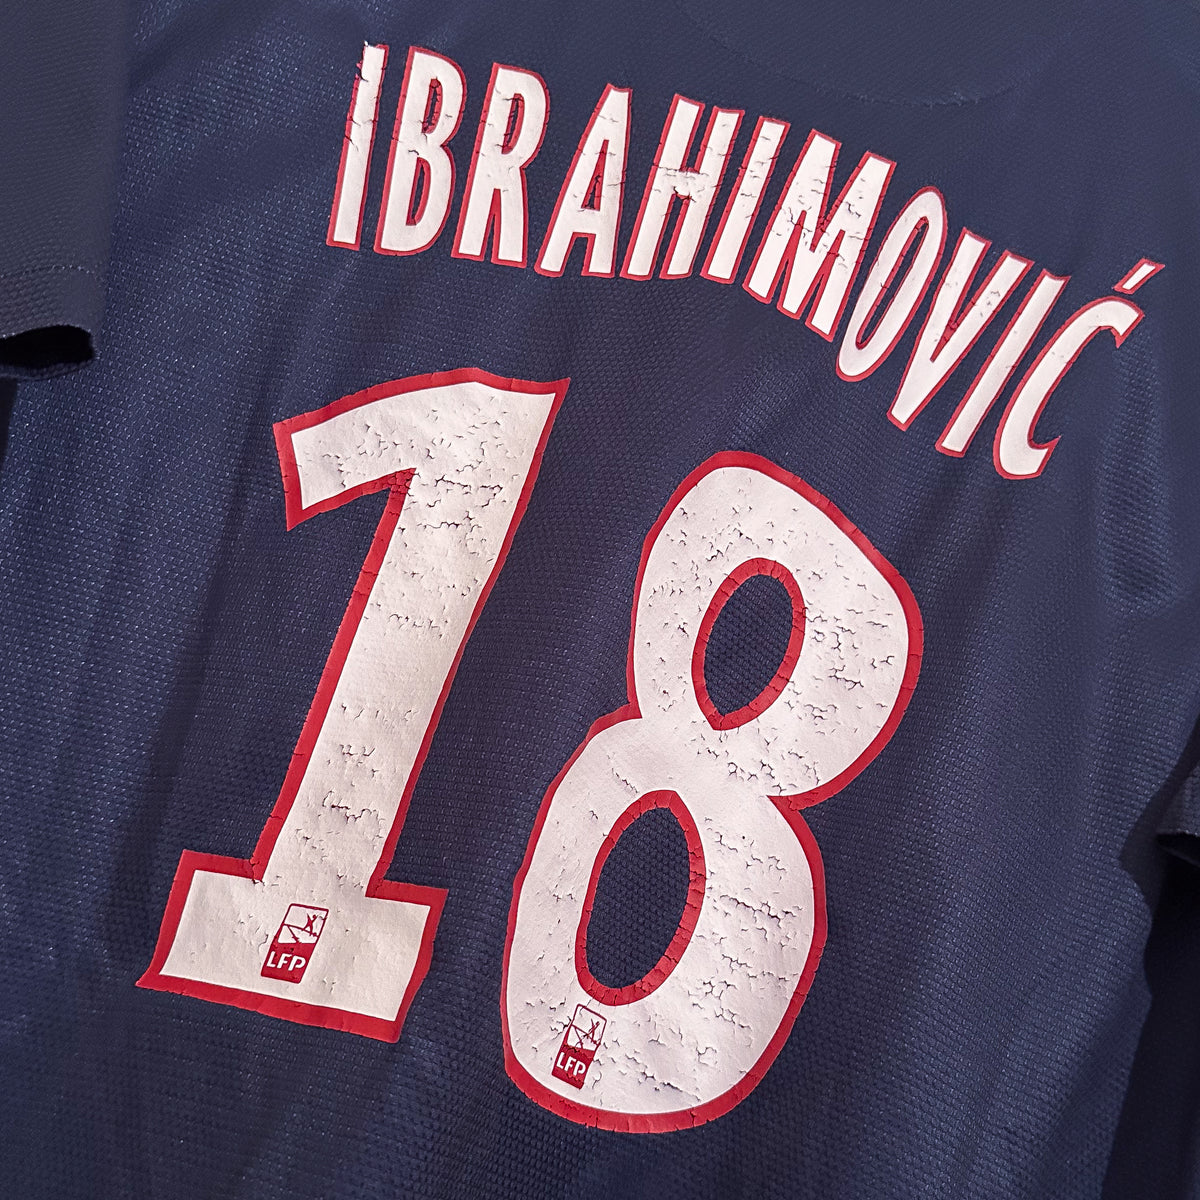 2012-2013 PSG Paris Saint Germain Nike Home Shirt #18 Zlatan Ibrahimovic  - Marketplace